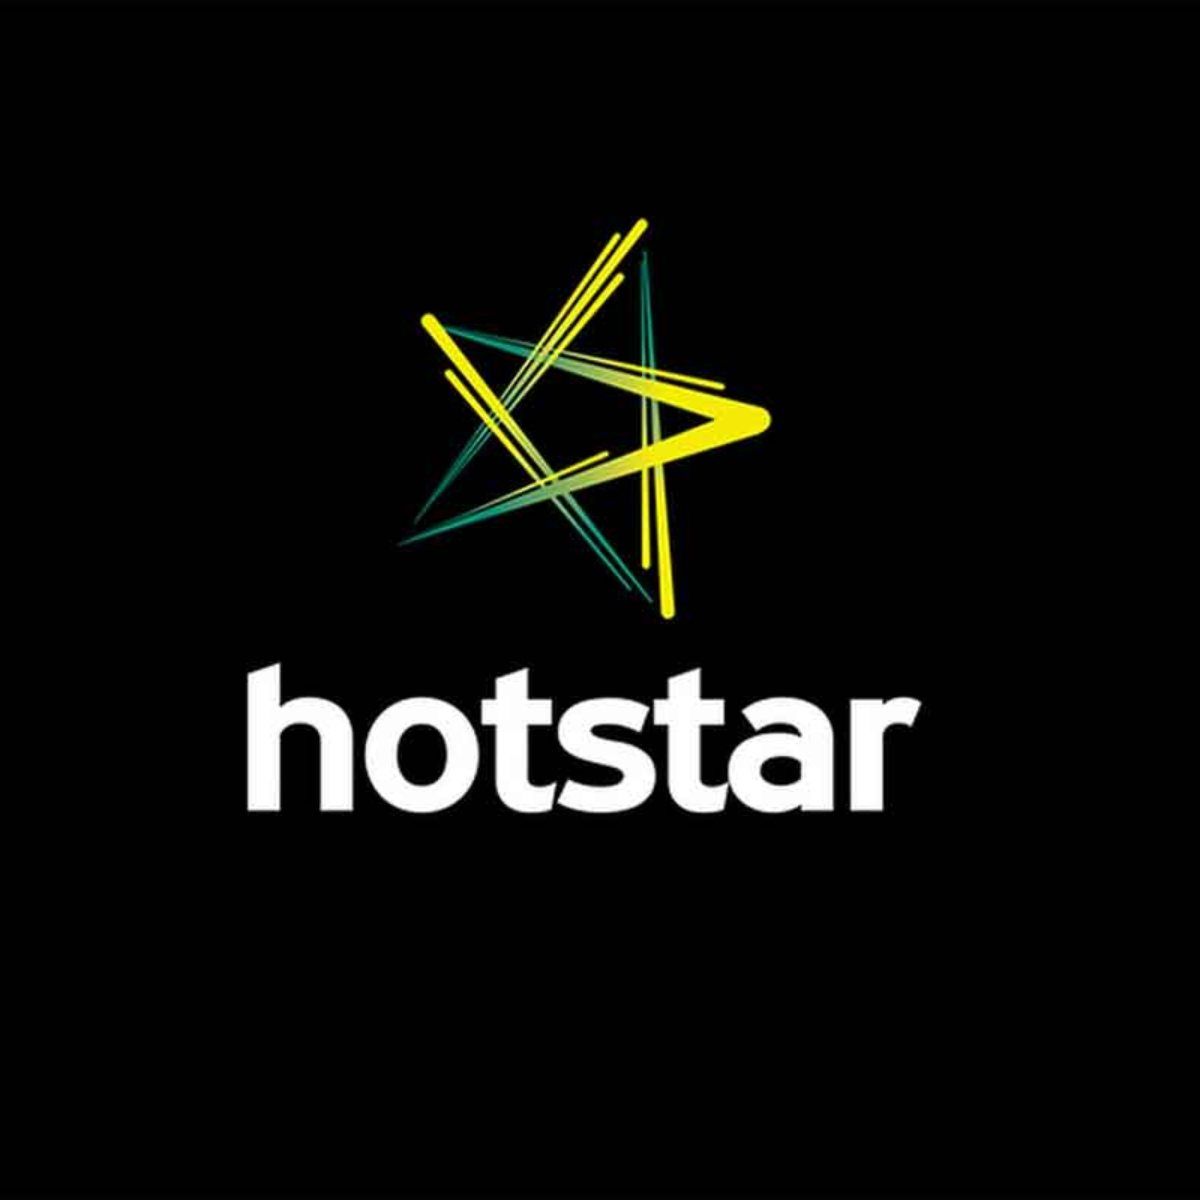 Hotstar Cricket- What Makes Hotstar the Best Platform to Watch Live Cricket Online